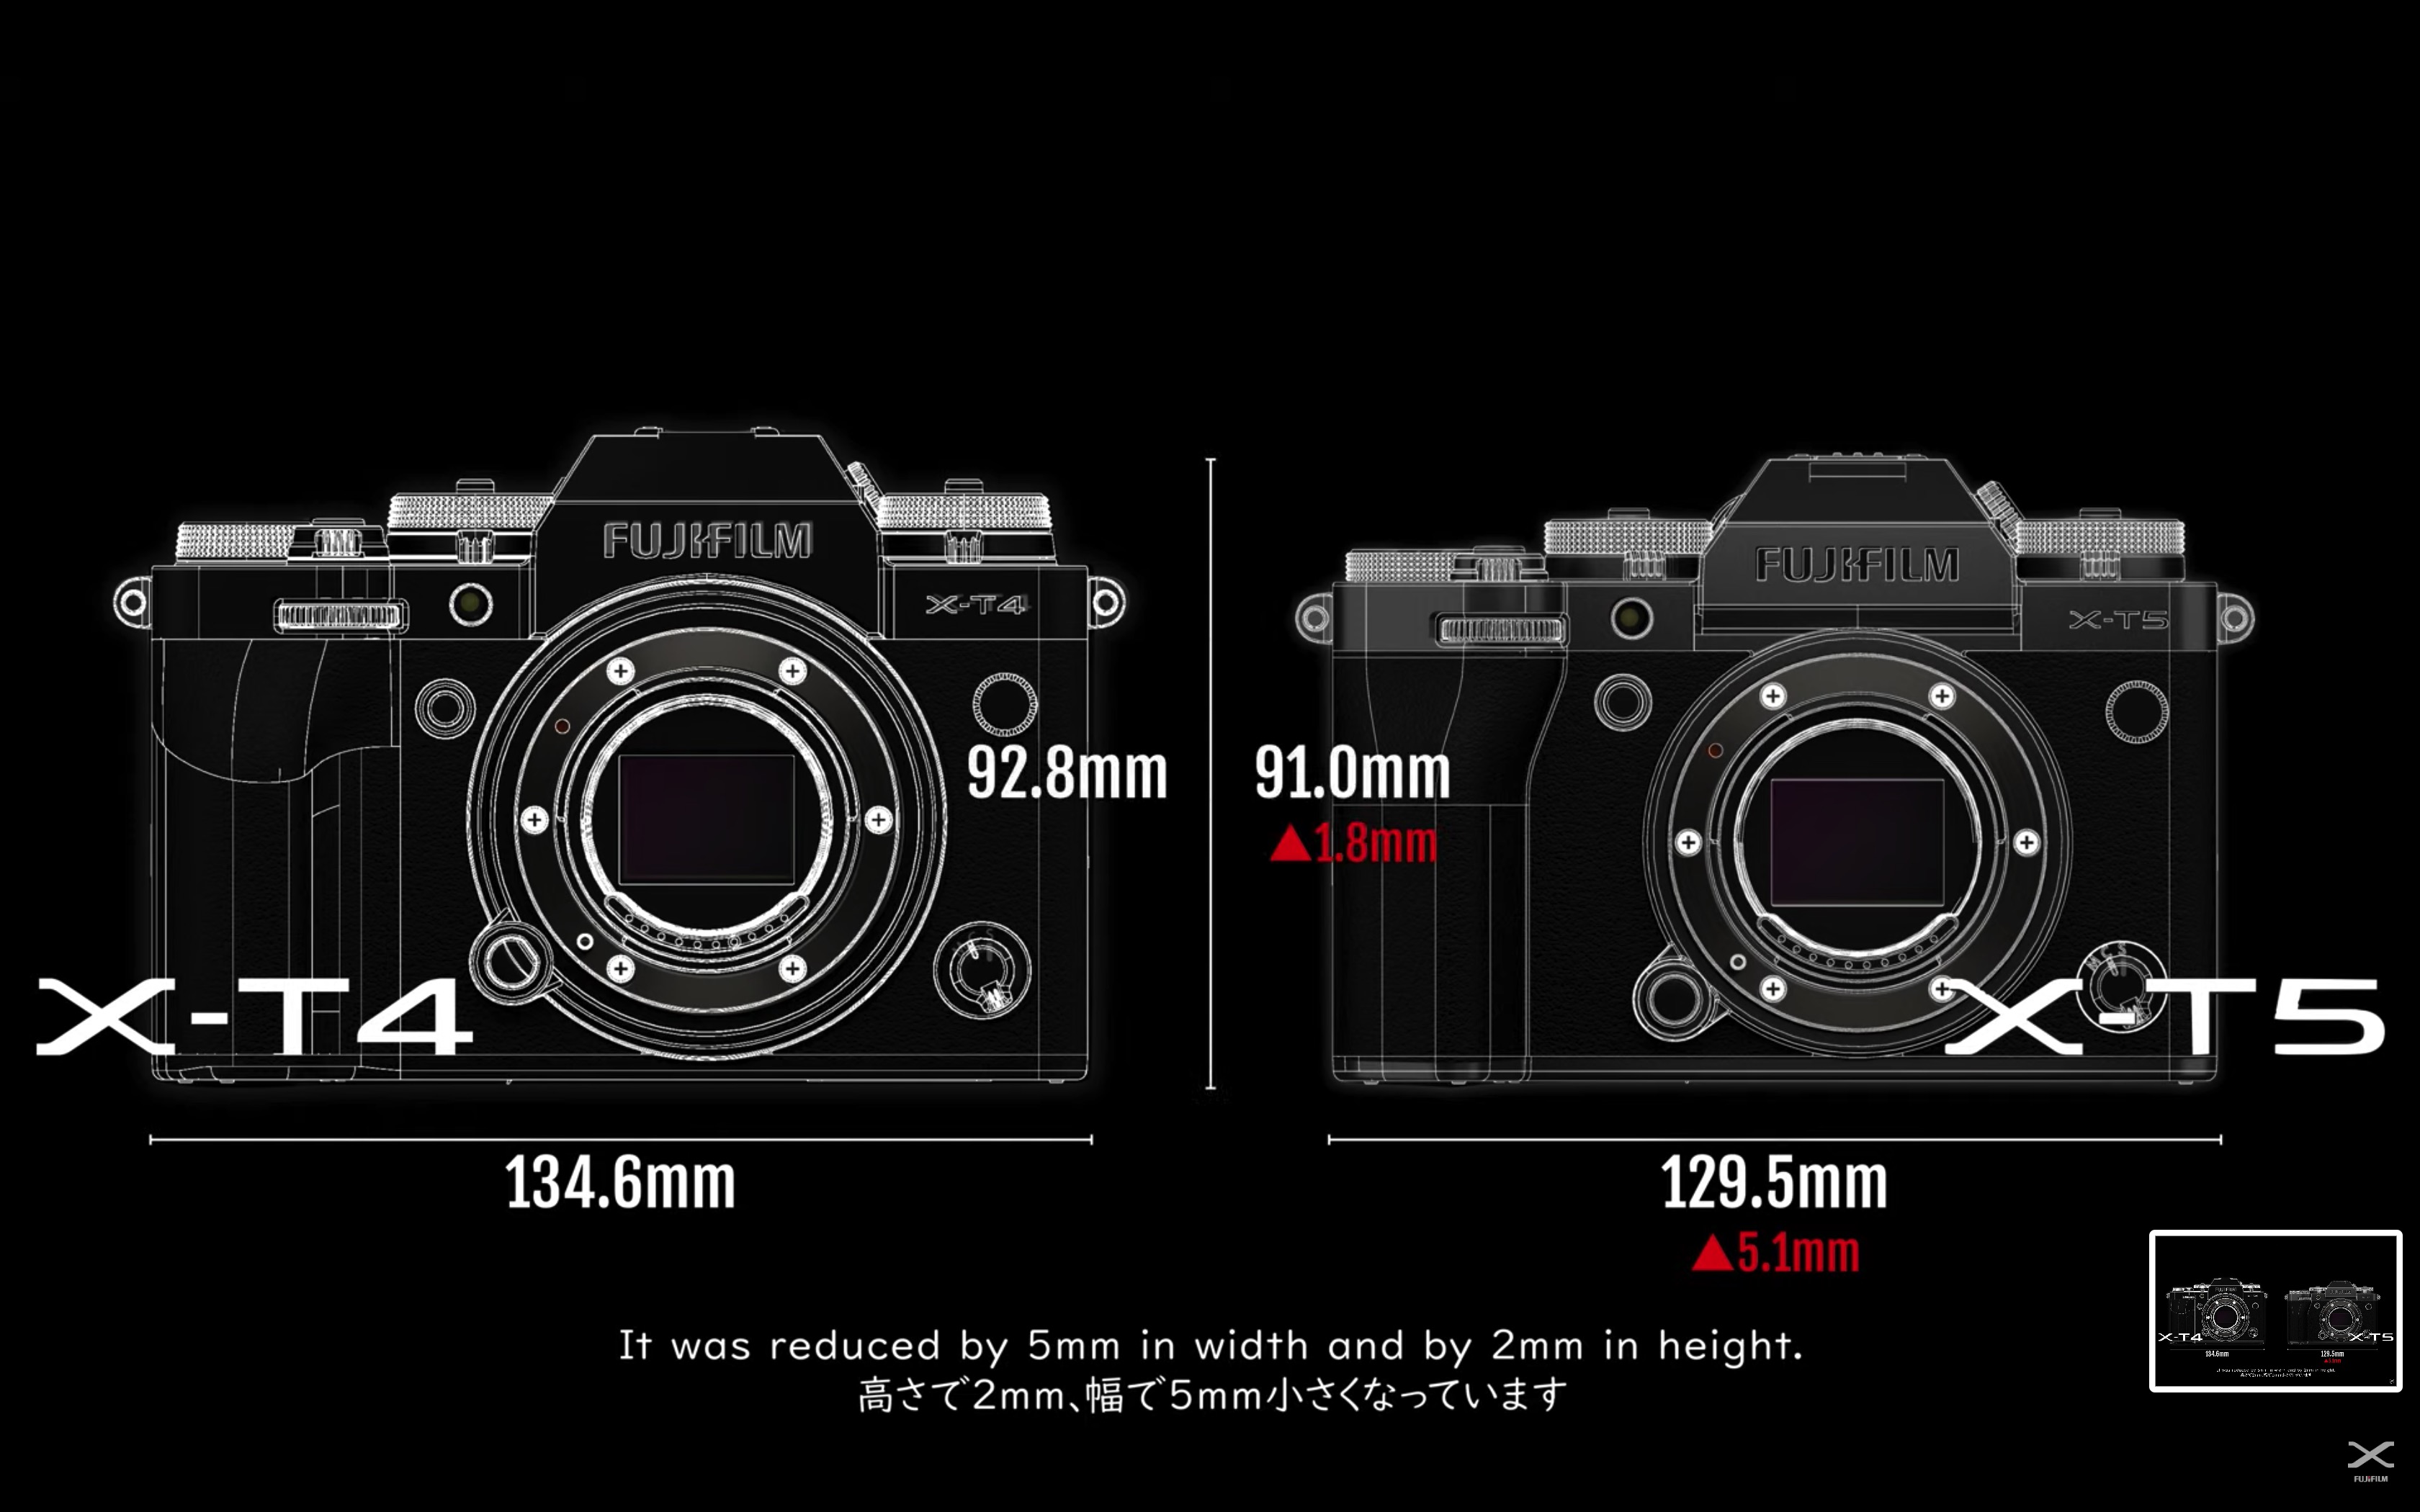 Diagram of the Fujifilm X-T5 camera